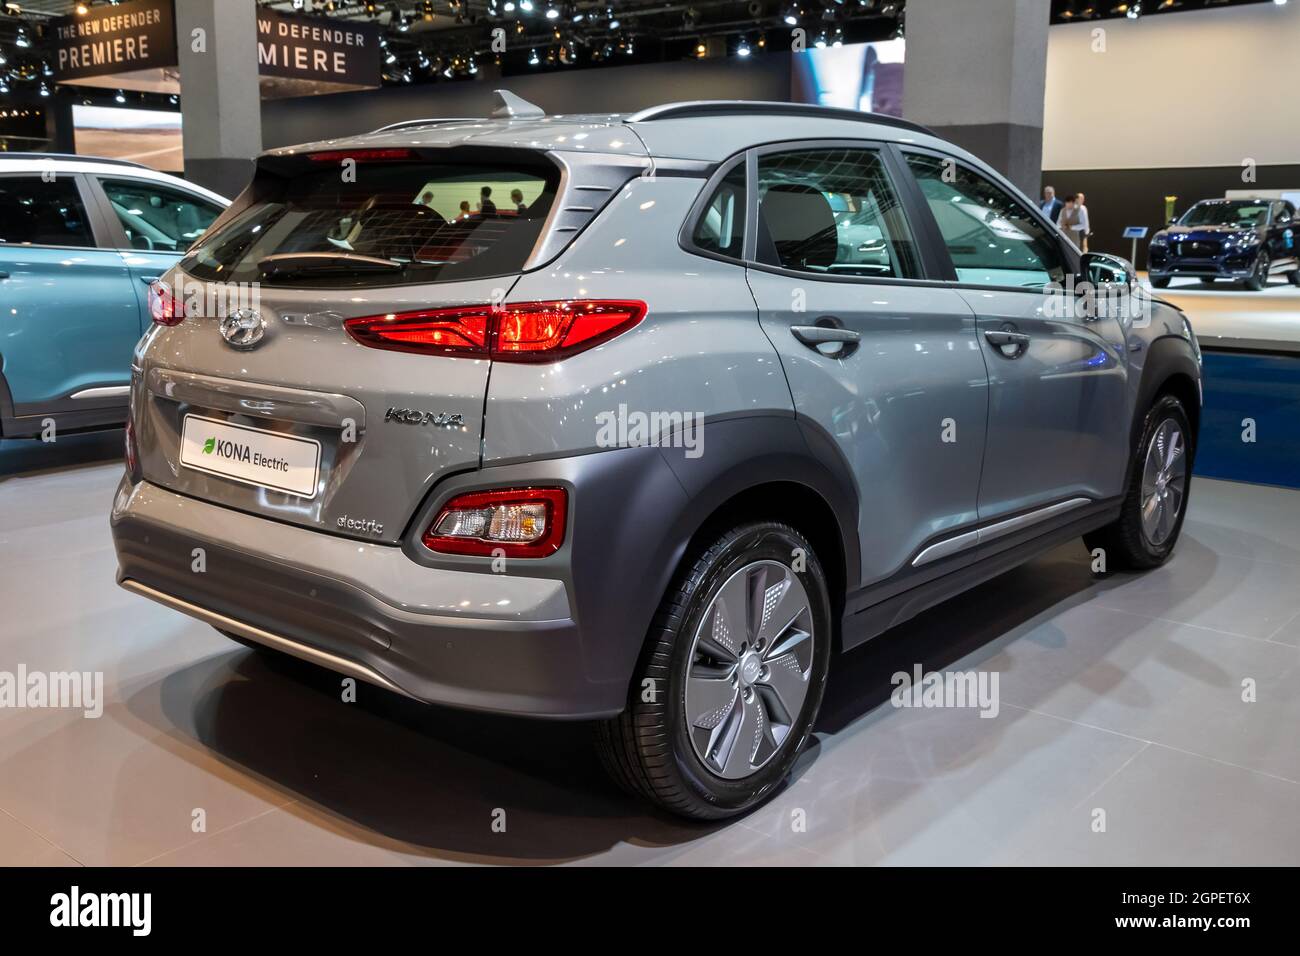 Hyundai KONA Electric car model shown at the Autosalon 2020 Motor Show. Brussels, Belgium - January 9, 2020. Stock Photo